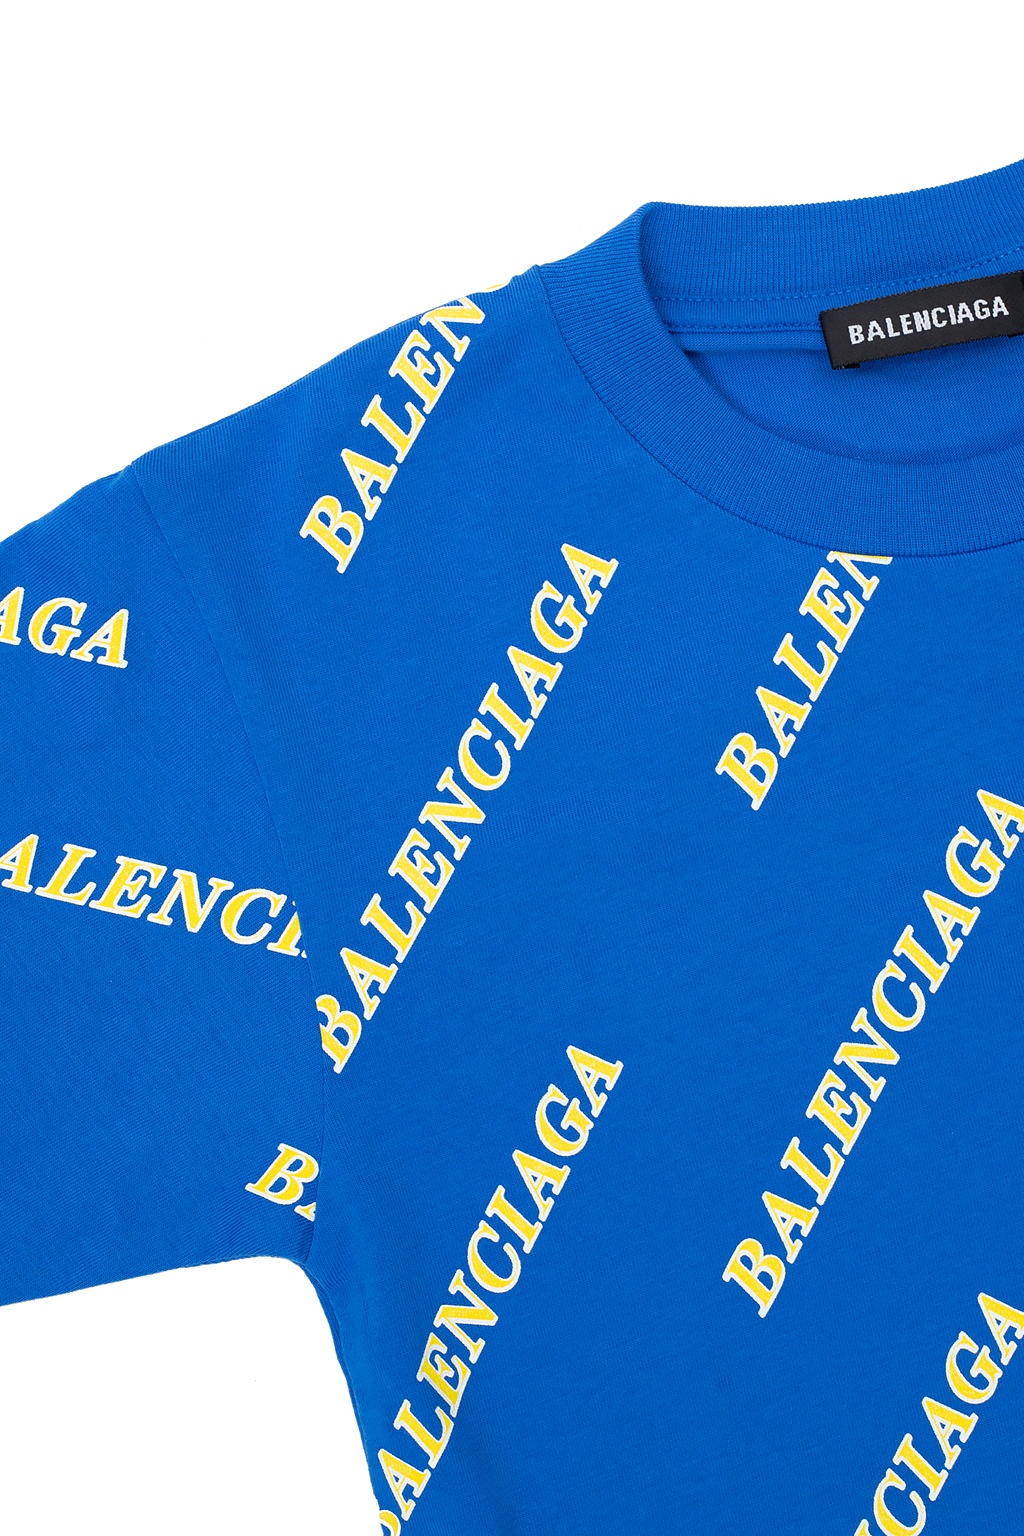 Balenciaga Kids Patrizia Pepe short sleeve stretch T-shirt